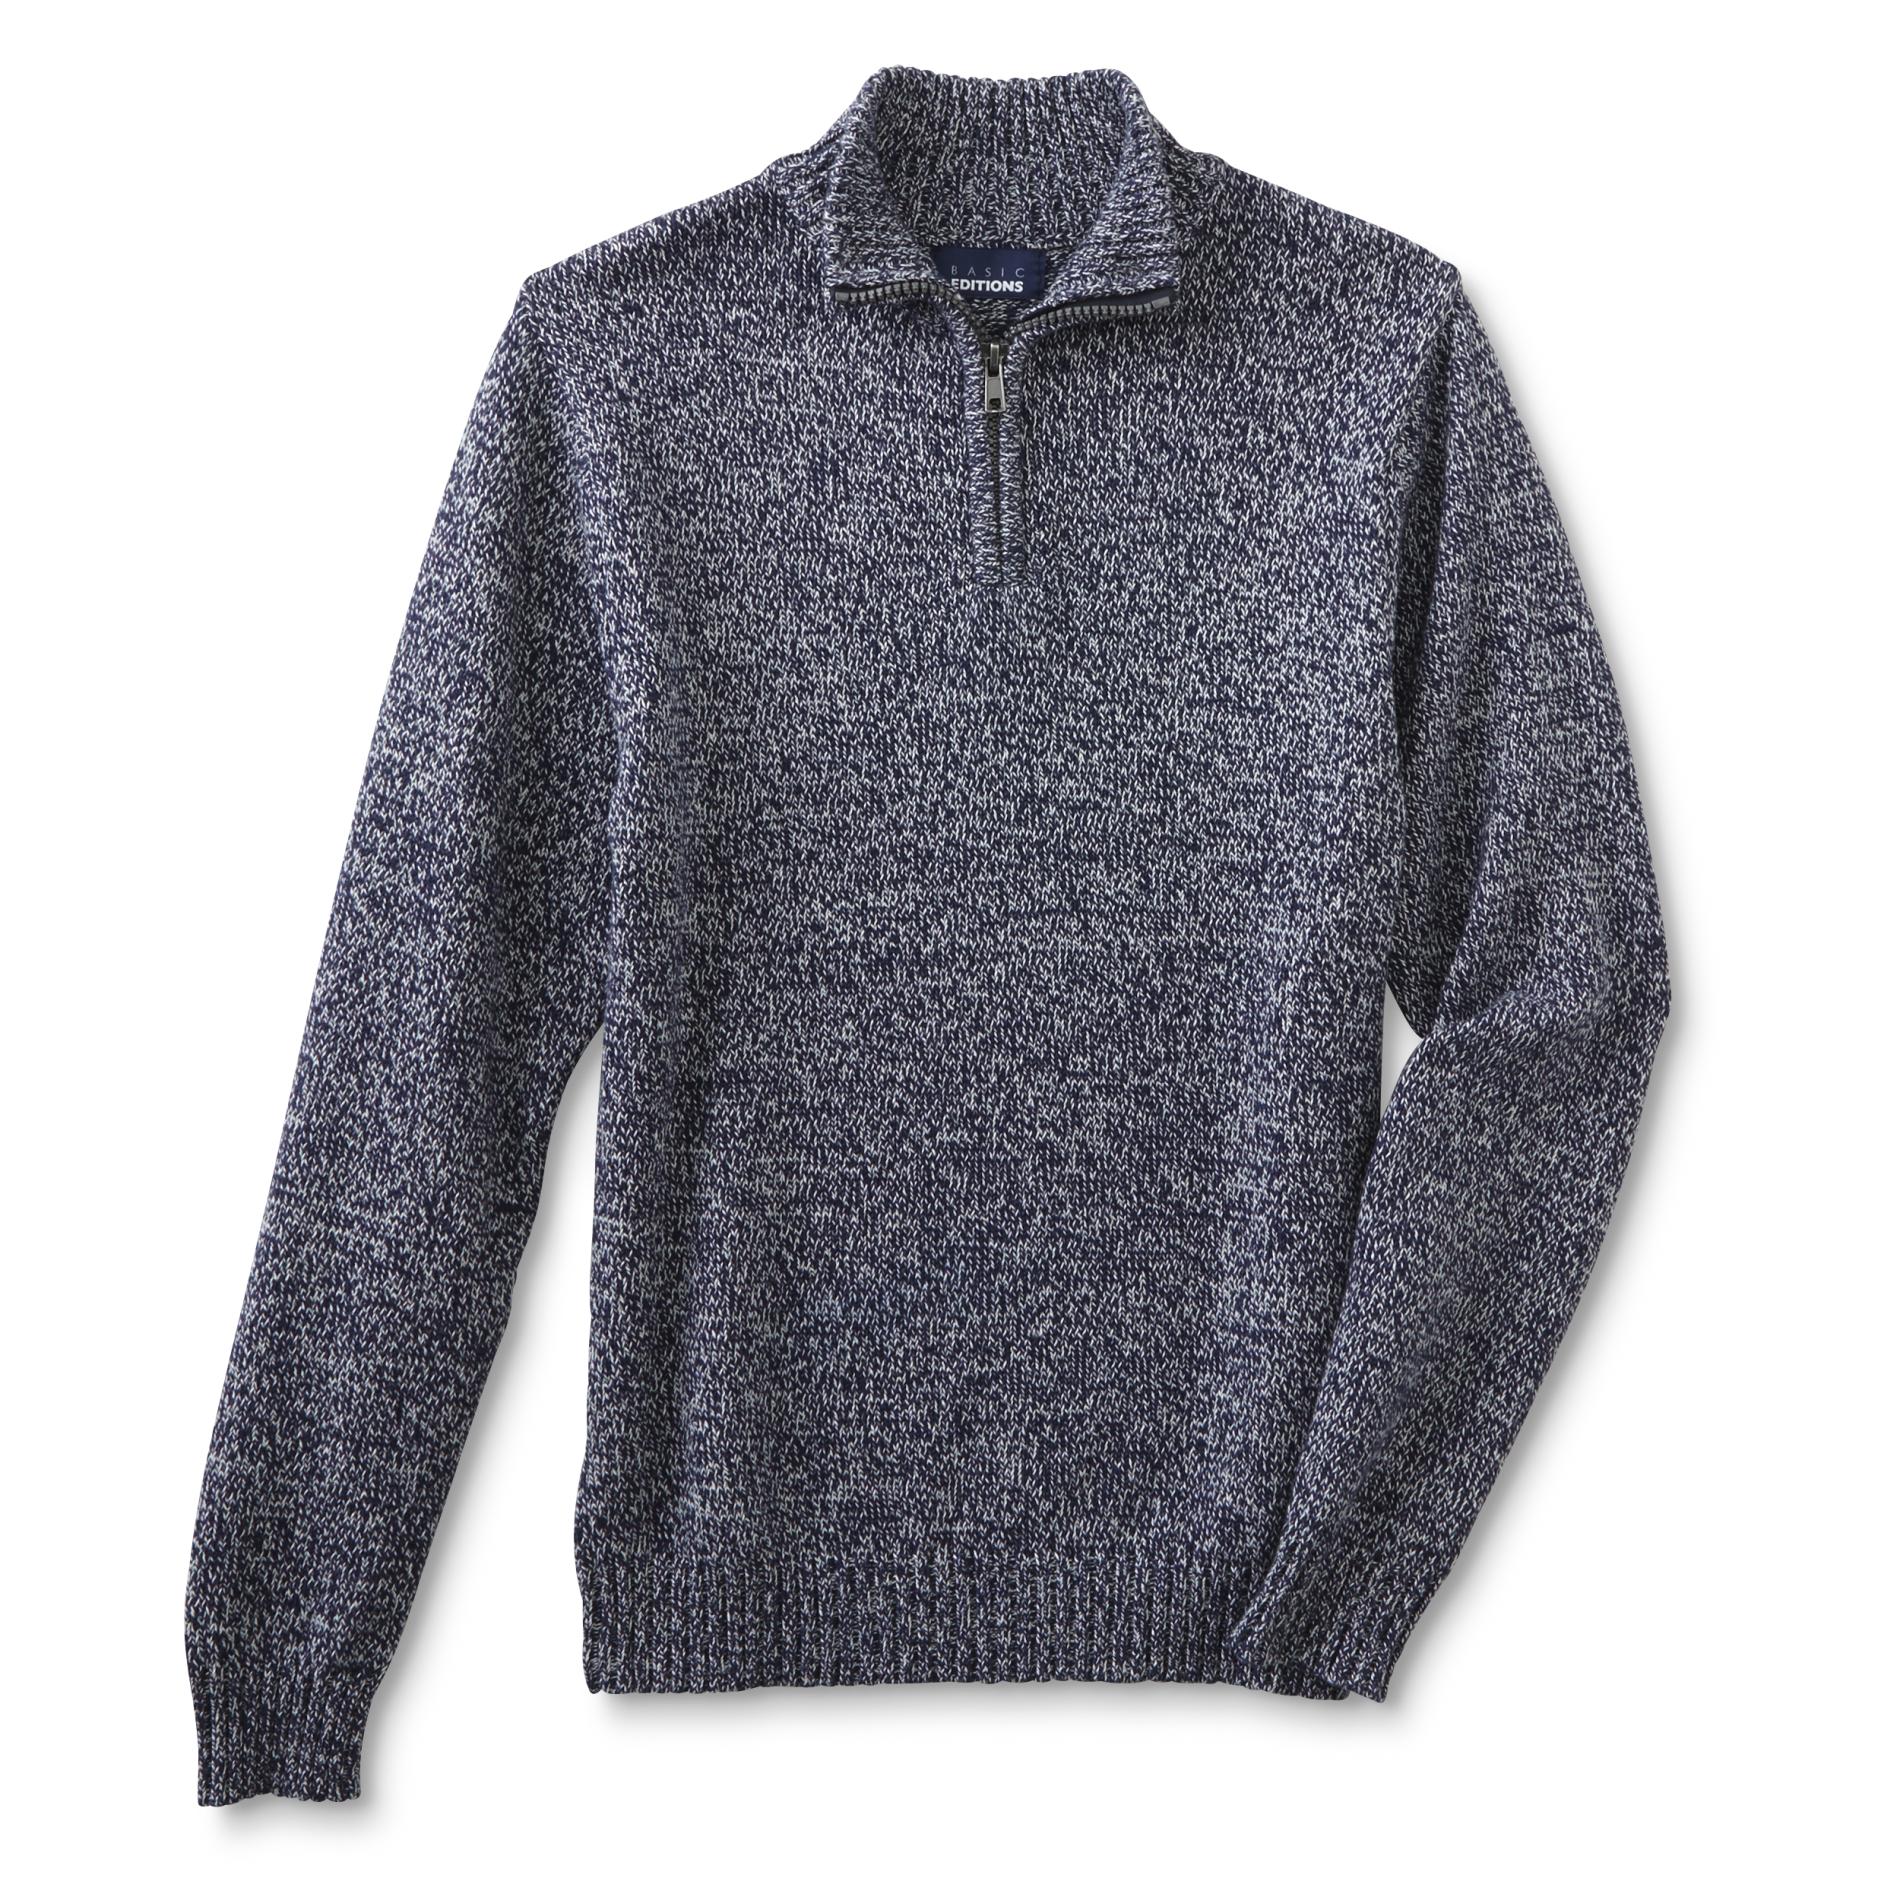 Basic Editions Boy's Quarter-Zip Sweater